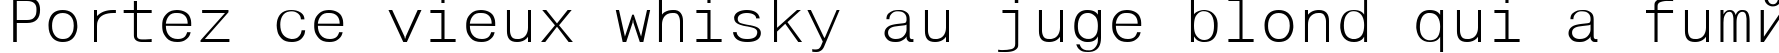 Пример написания шрифтом HelvFixed текста на французском